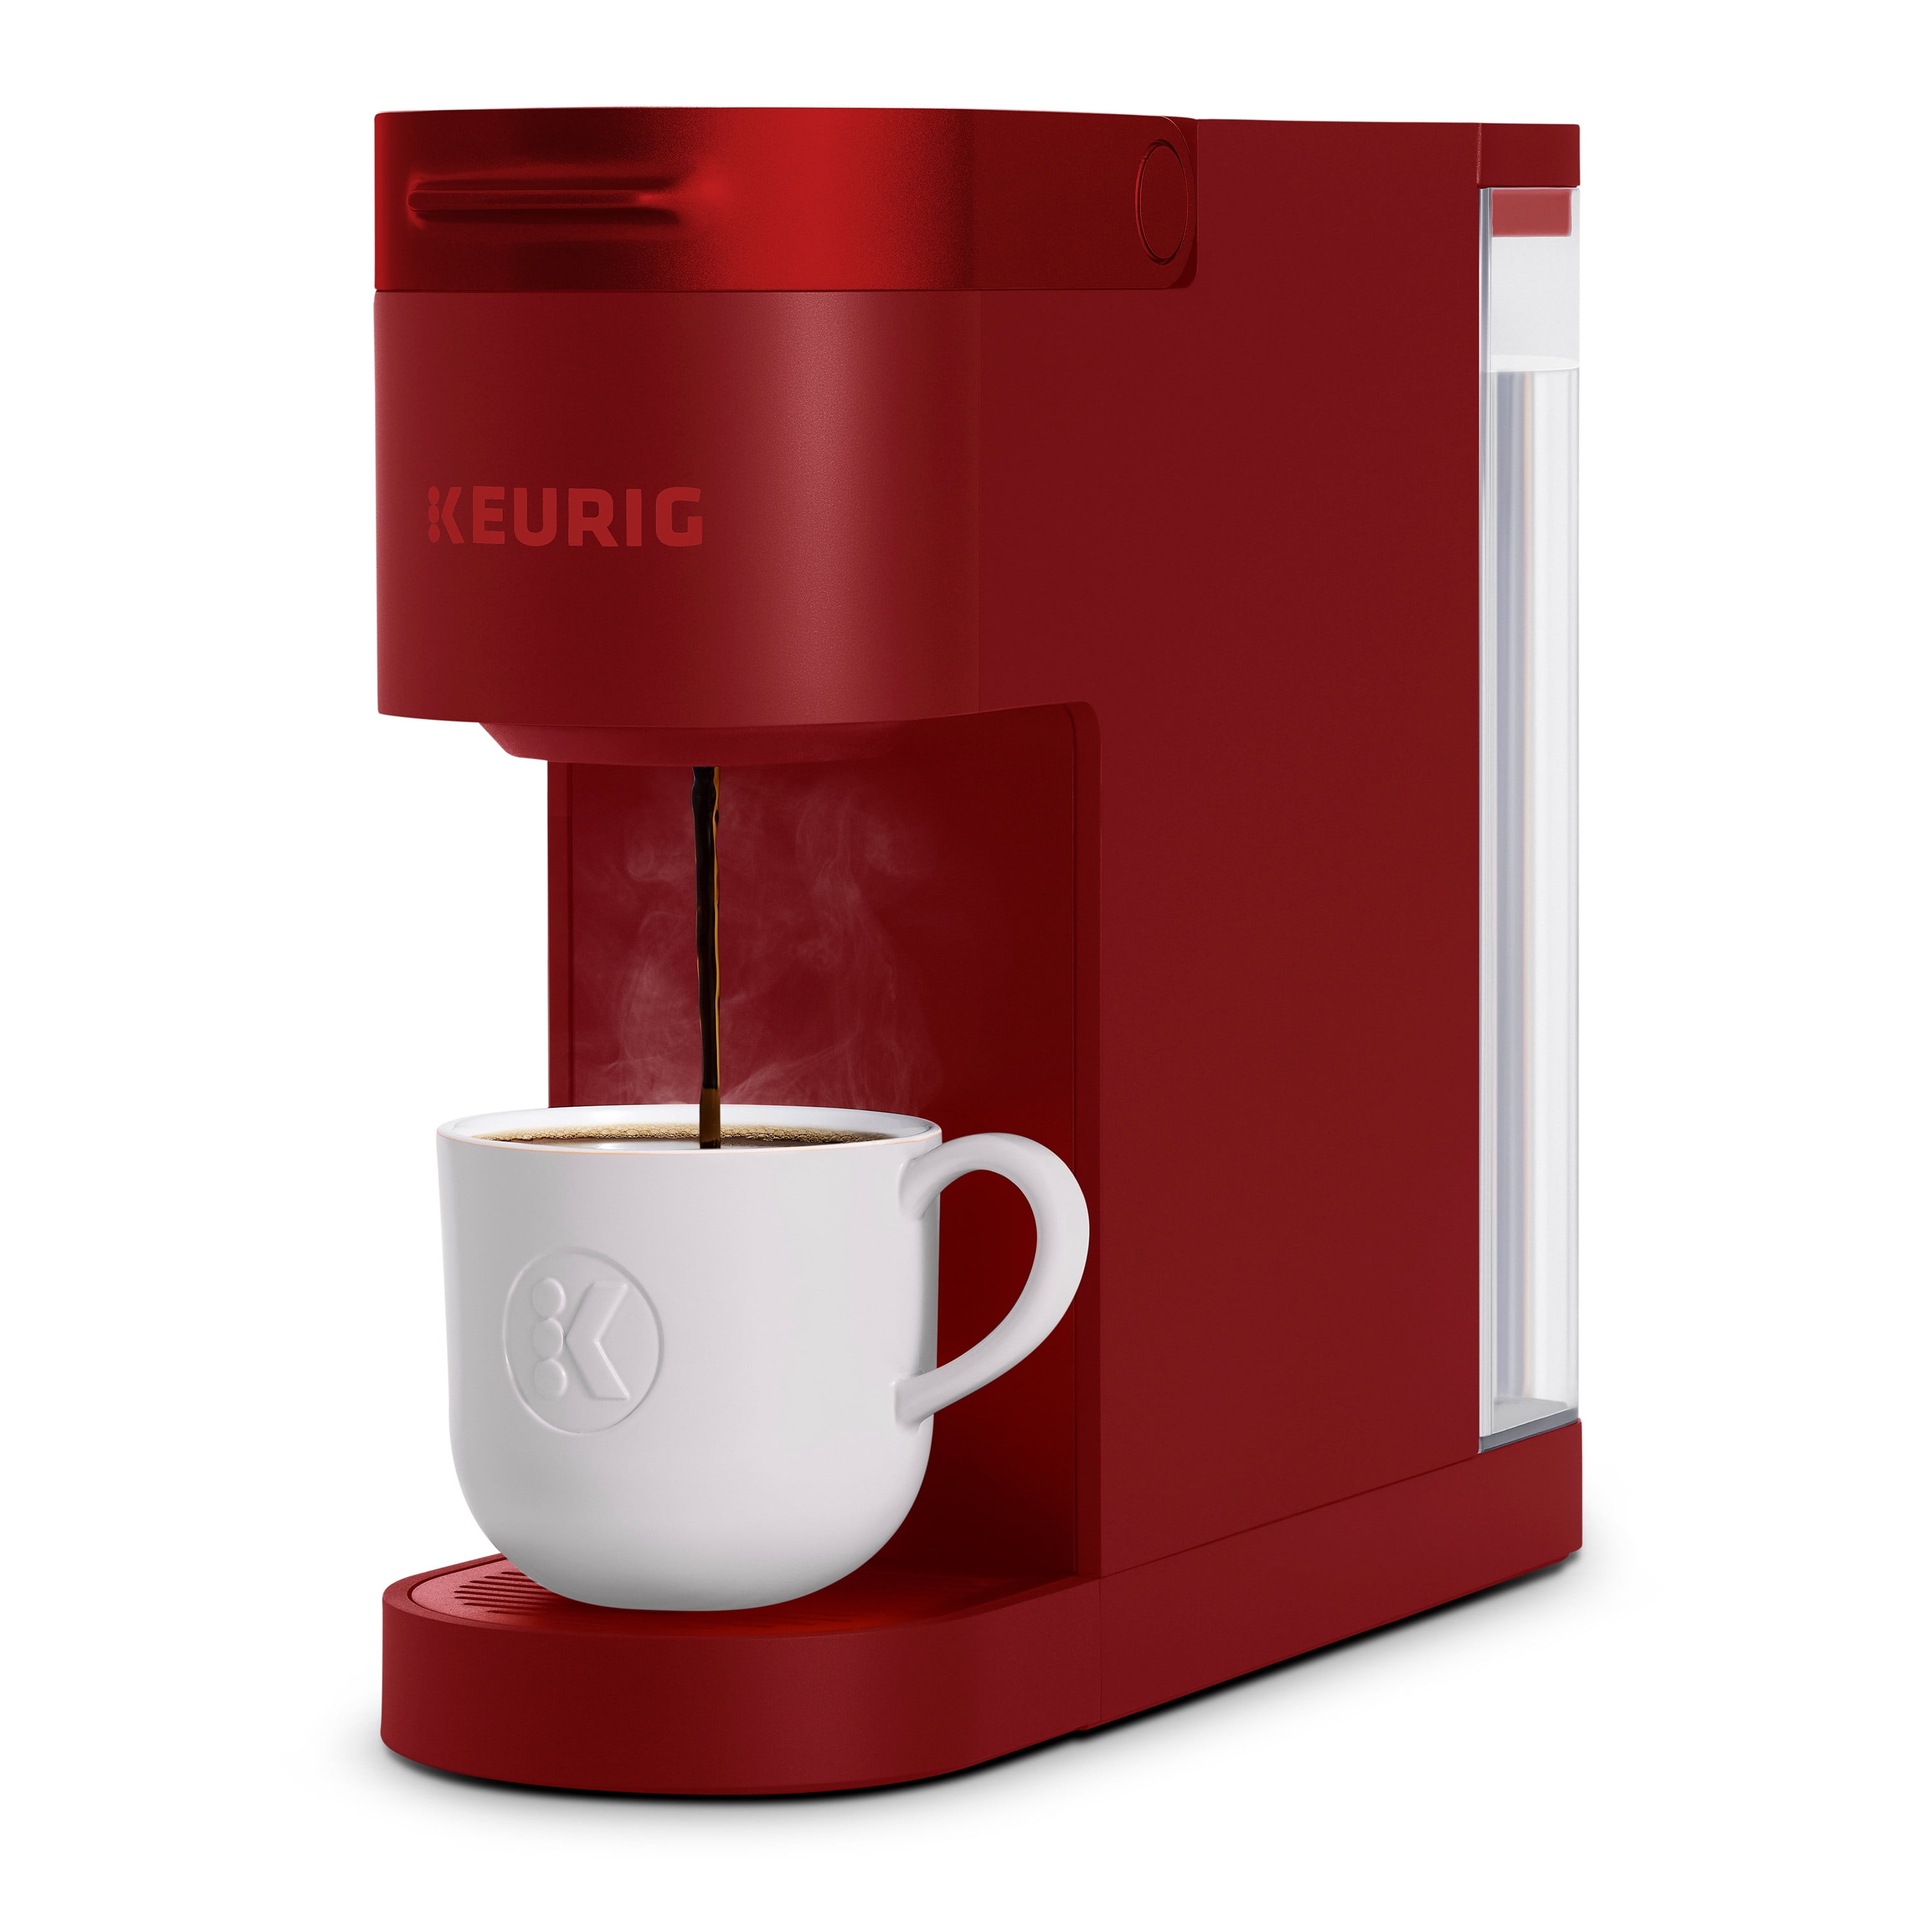 Keurig® K- Slim® Single Serve K-Cup Pod Coffee Maker, Multistream  Technology, Scarlet Red